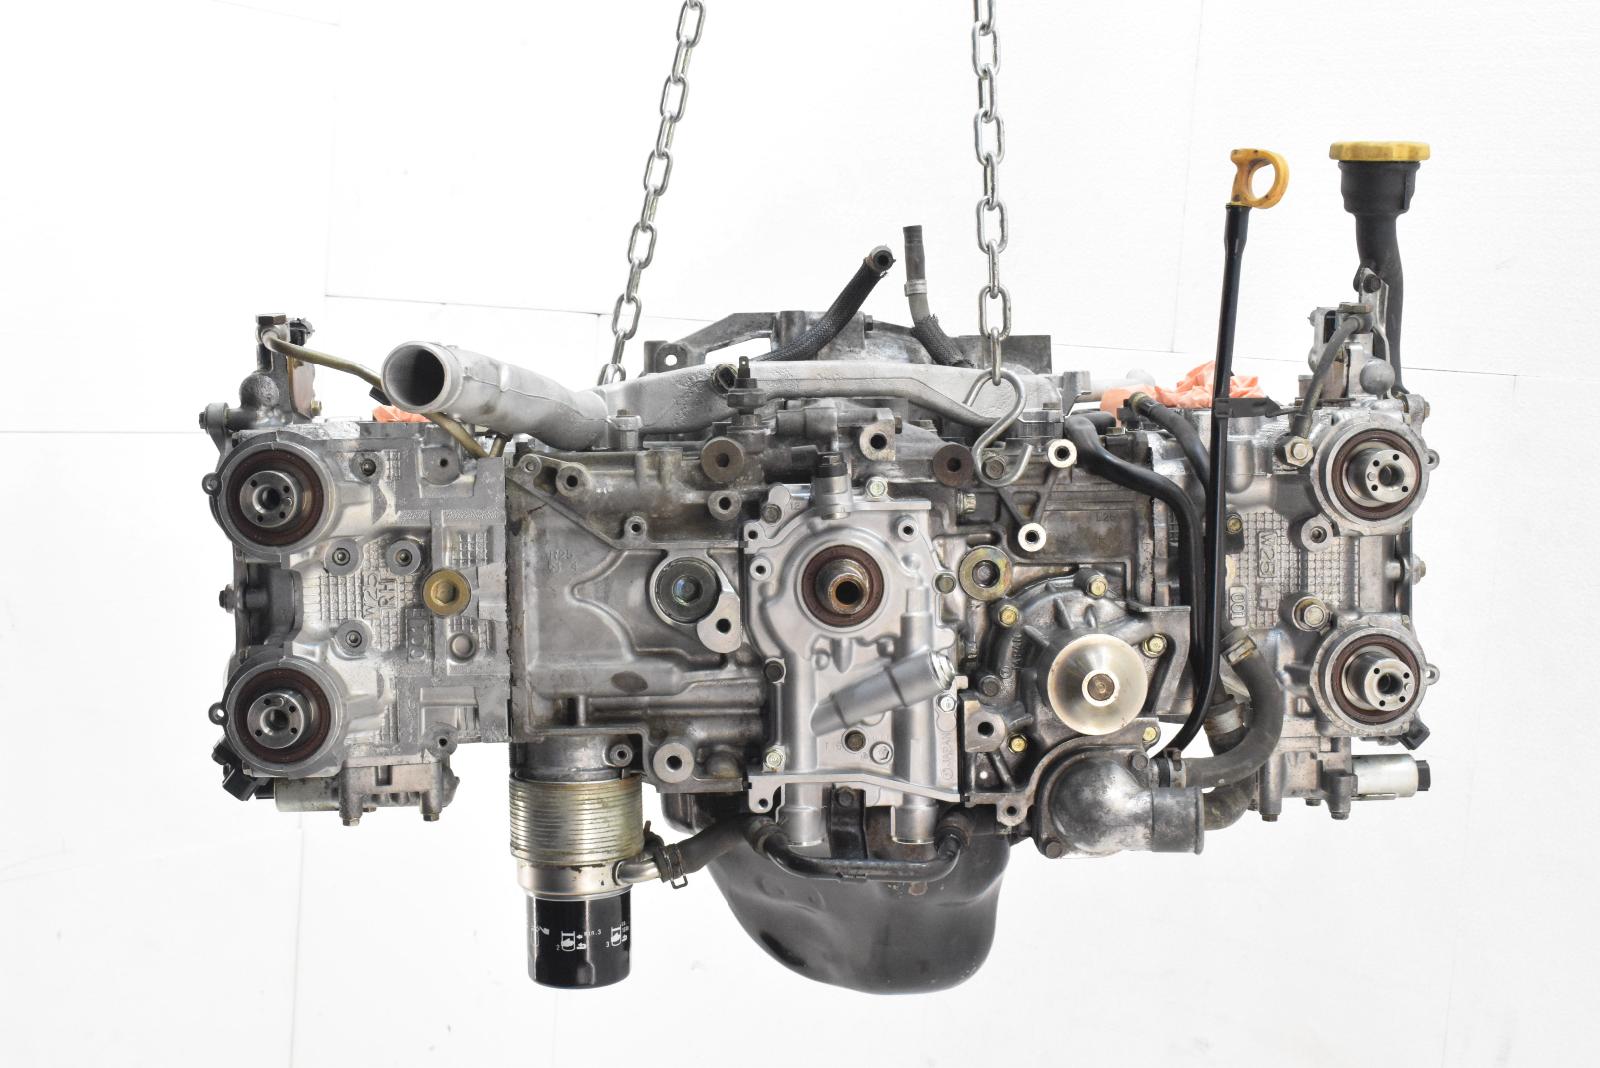 Subaru Impreza Wrx Sti 2.5 Rebuilt Motor Engine Boxer